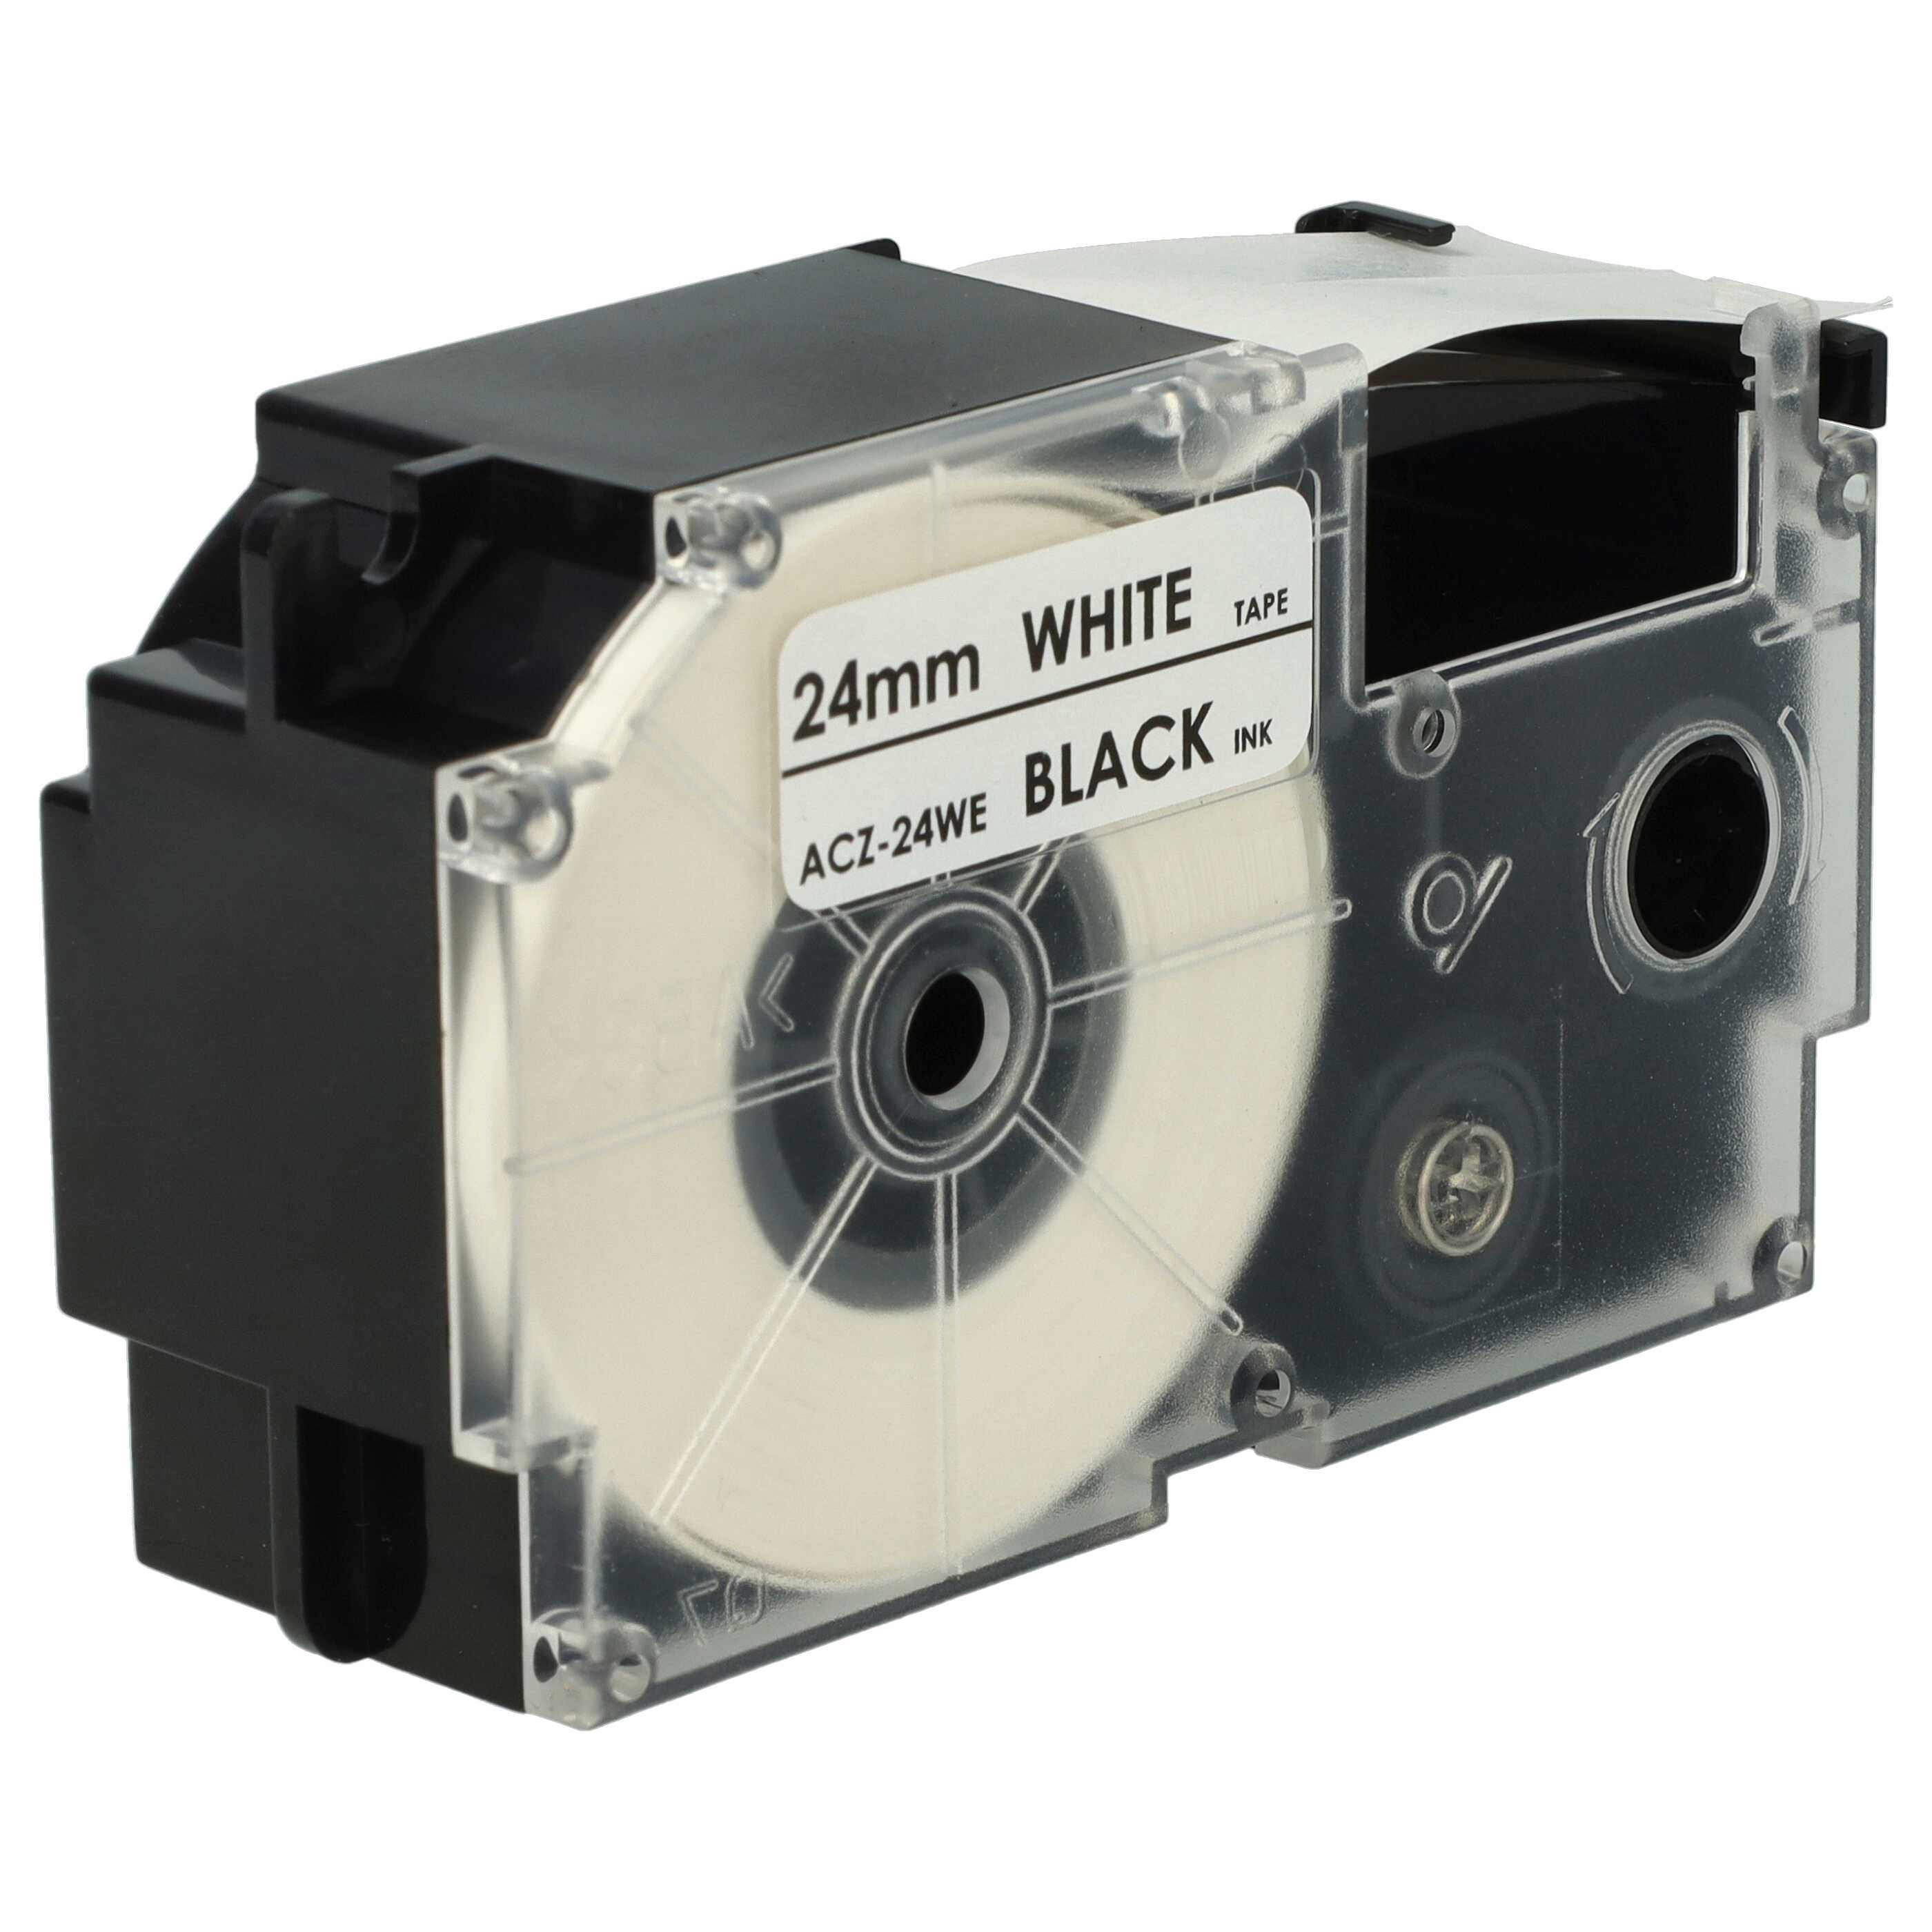 10x Cassetta nastro sostituisce Casio XR-24WE1 per etichettatrice Casio 24mm nero su bianco